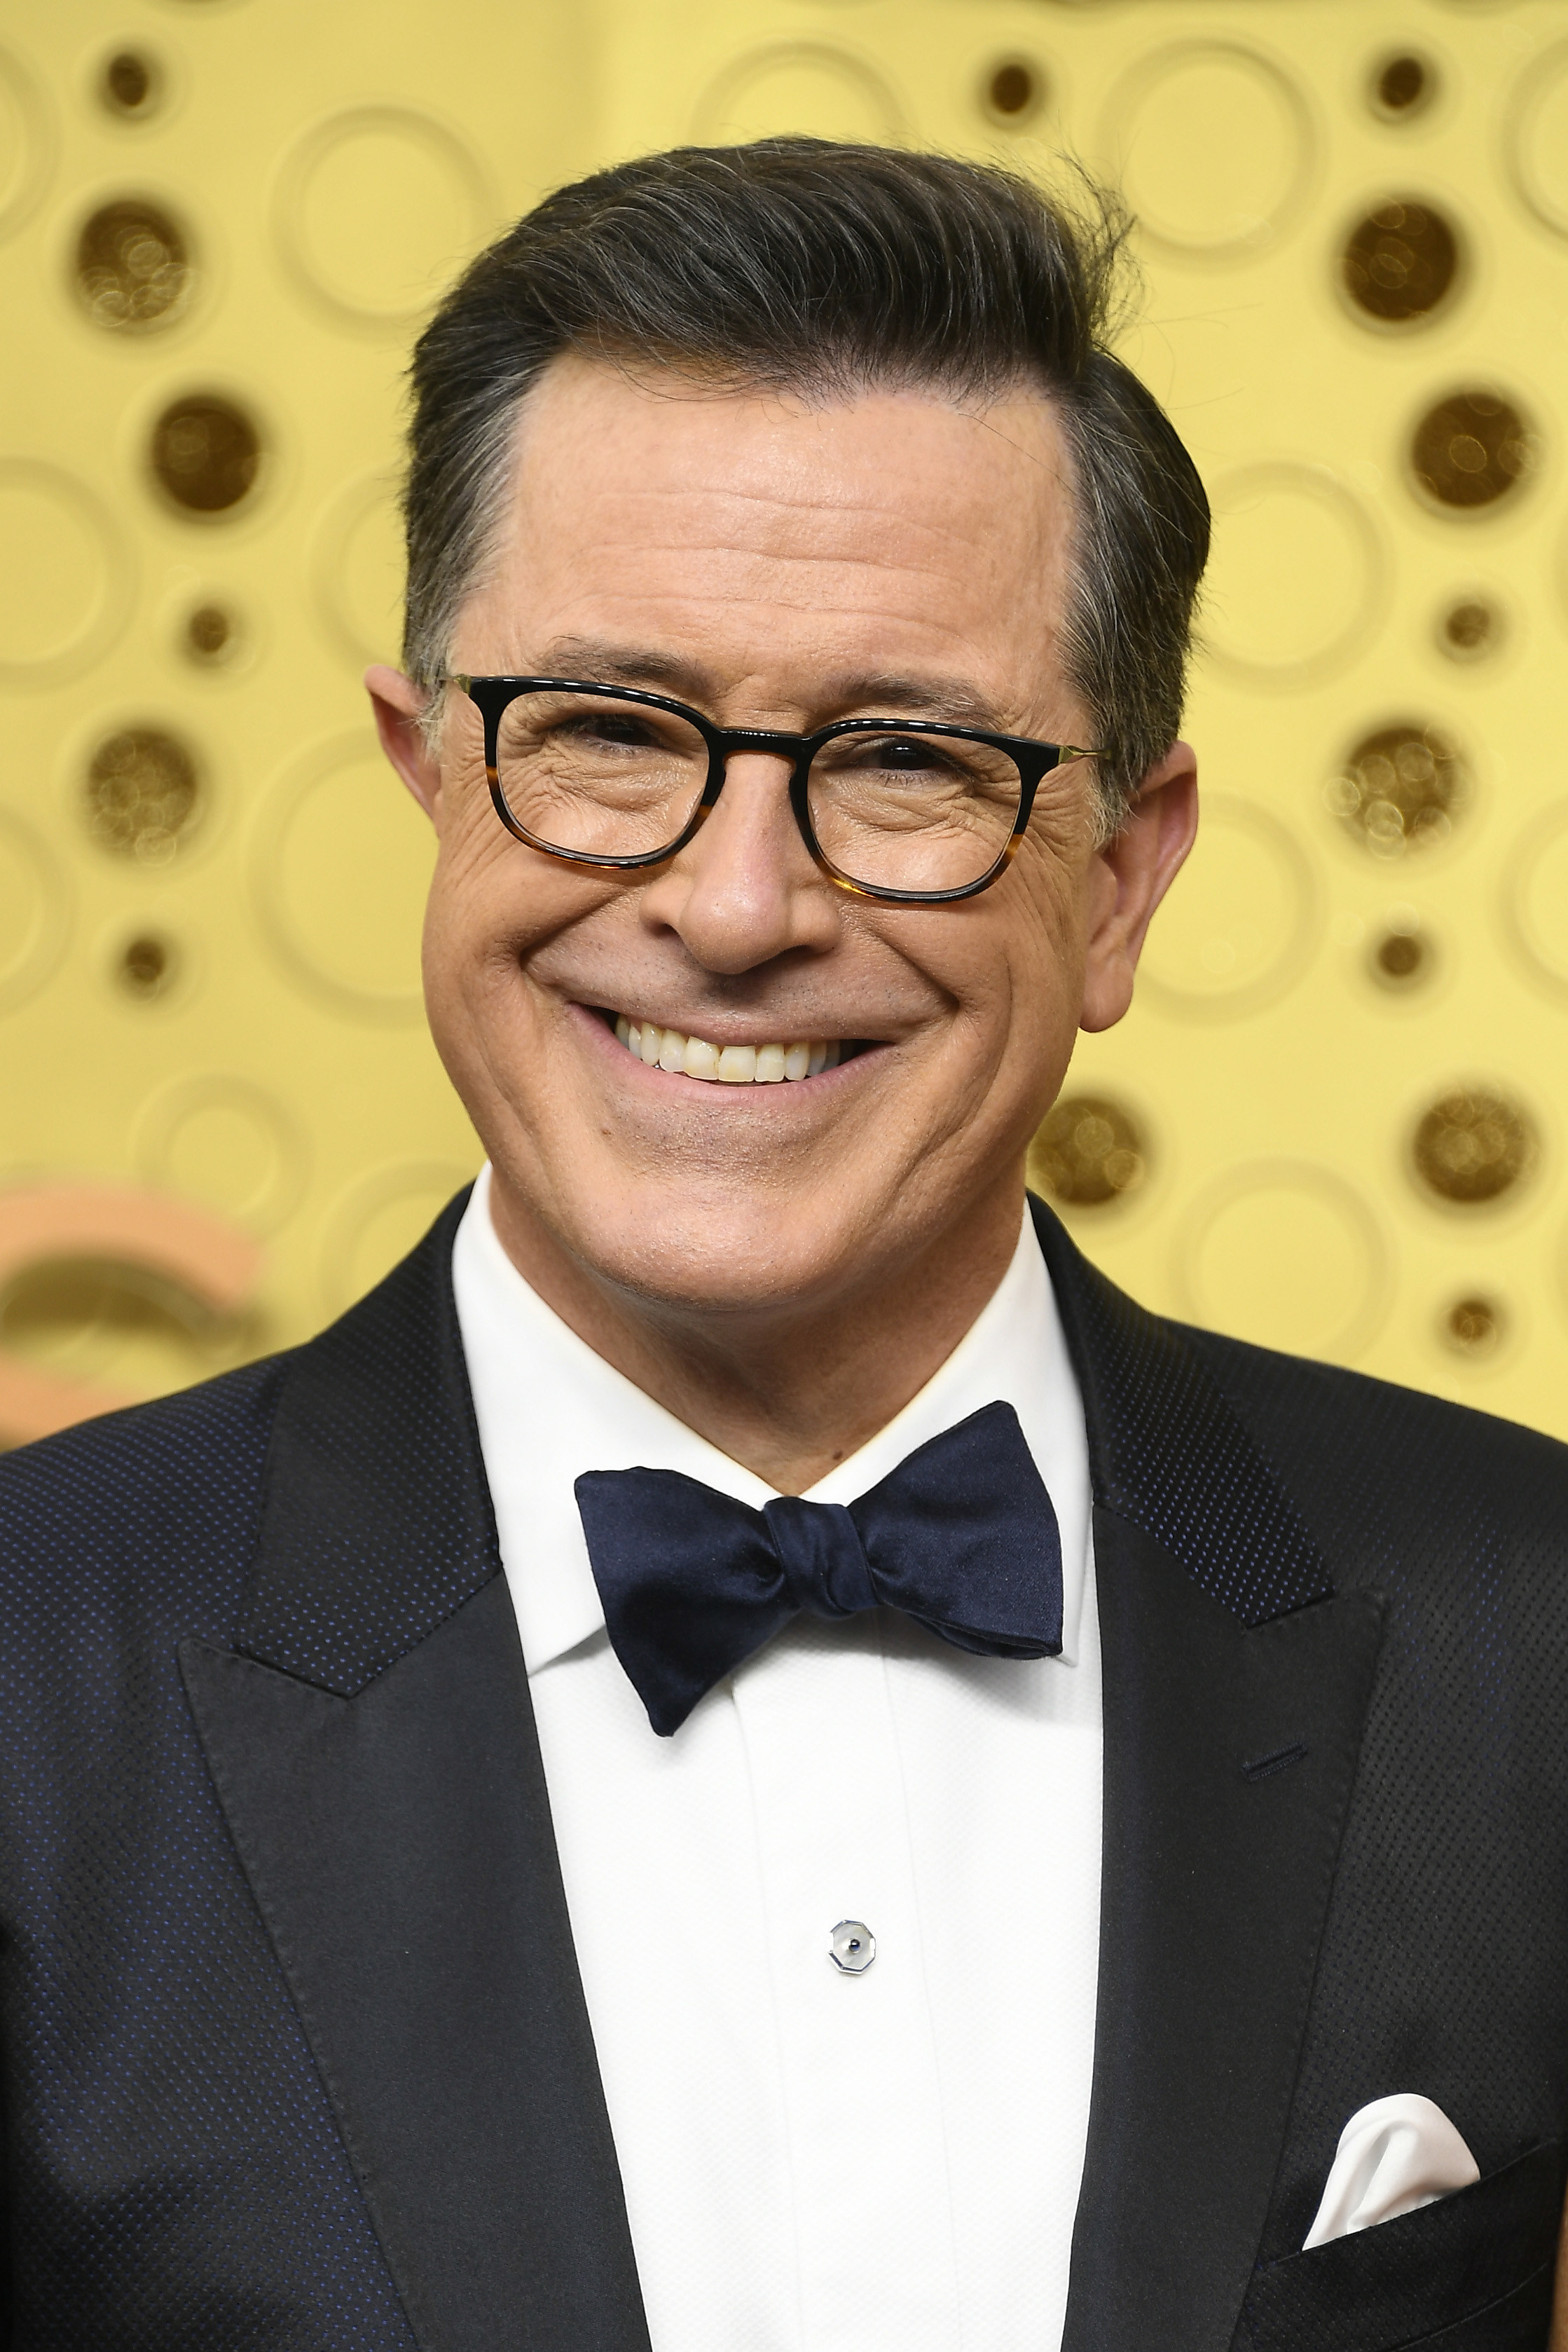 Closeup of Stephen Colbert